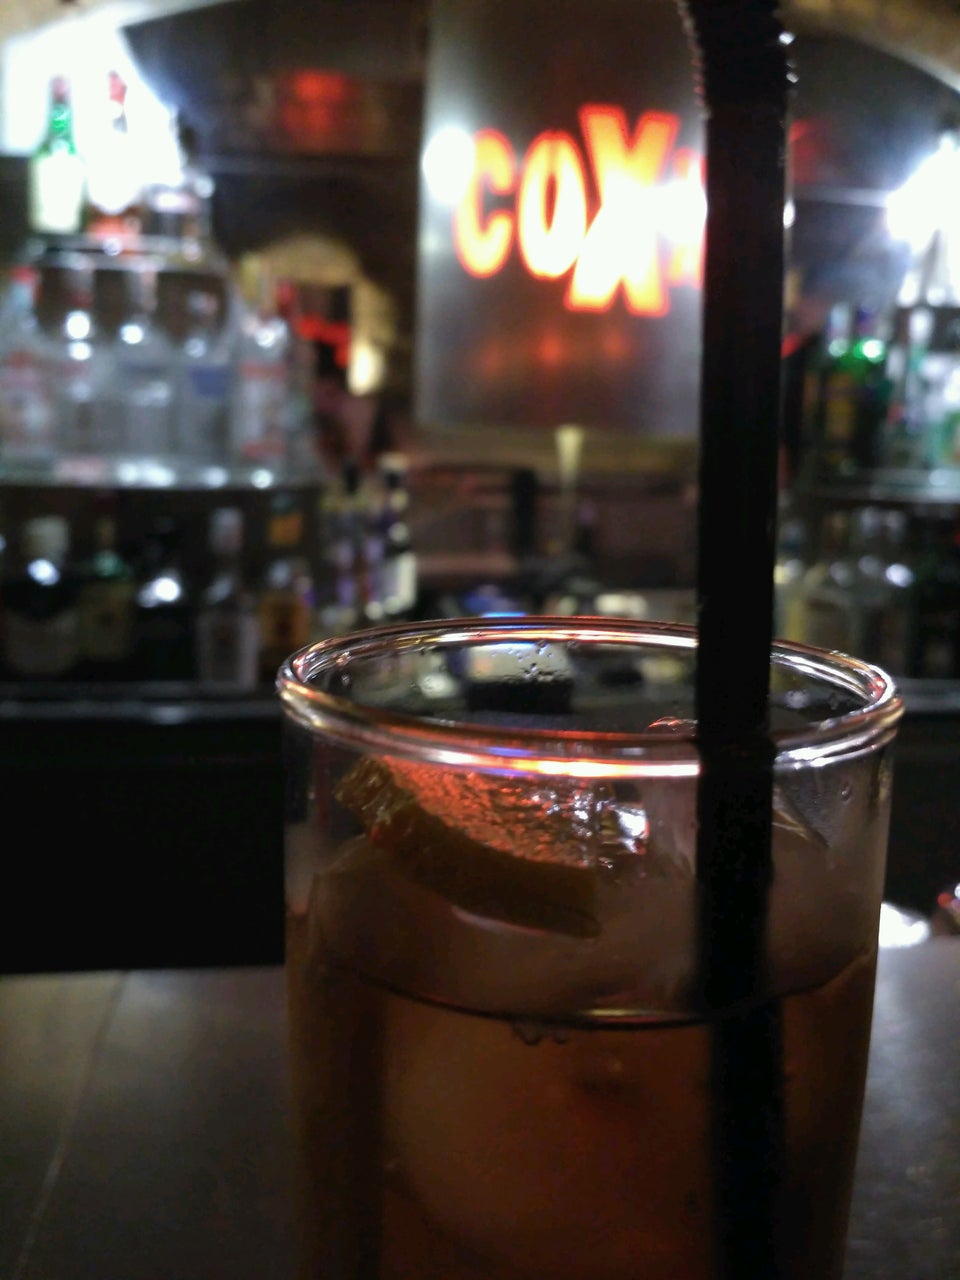 Photo of CoXx Men's Bar